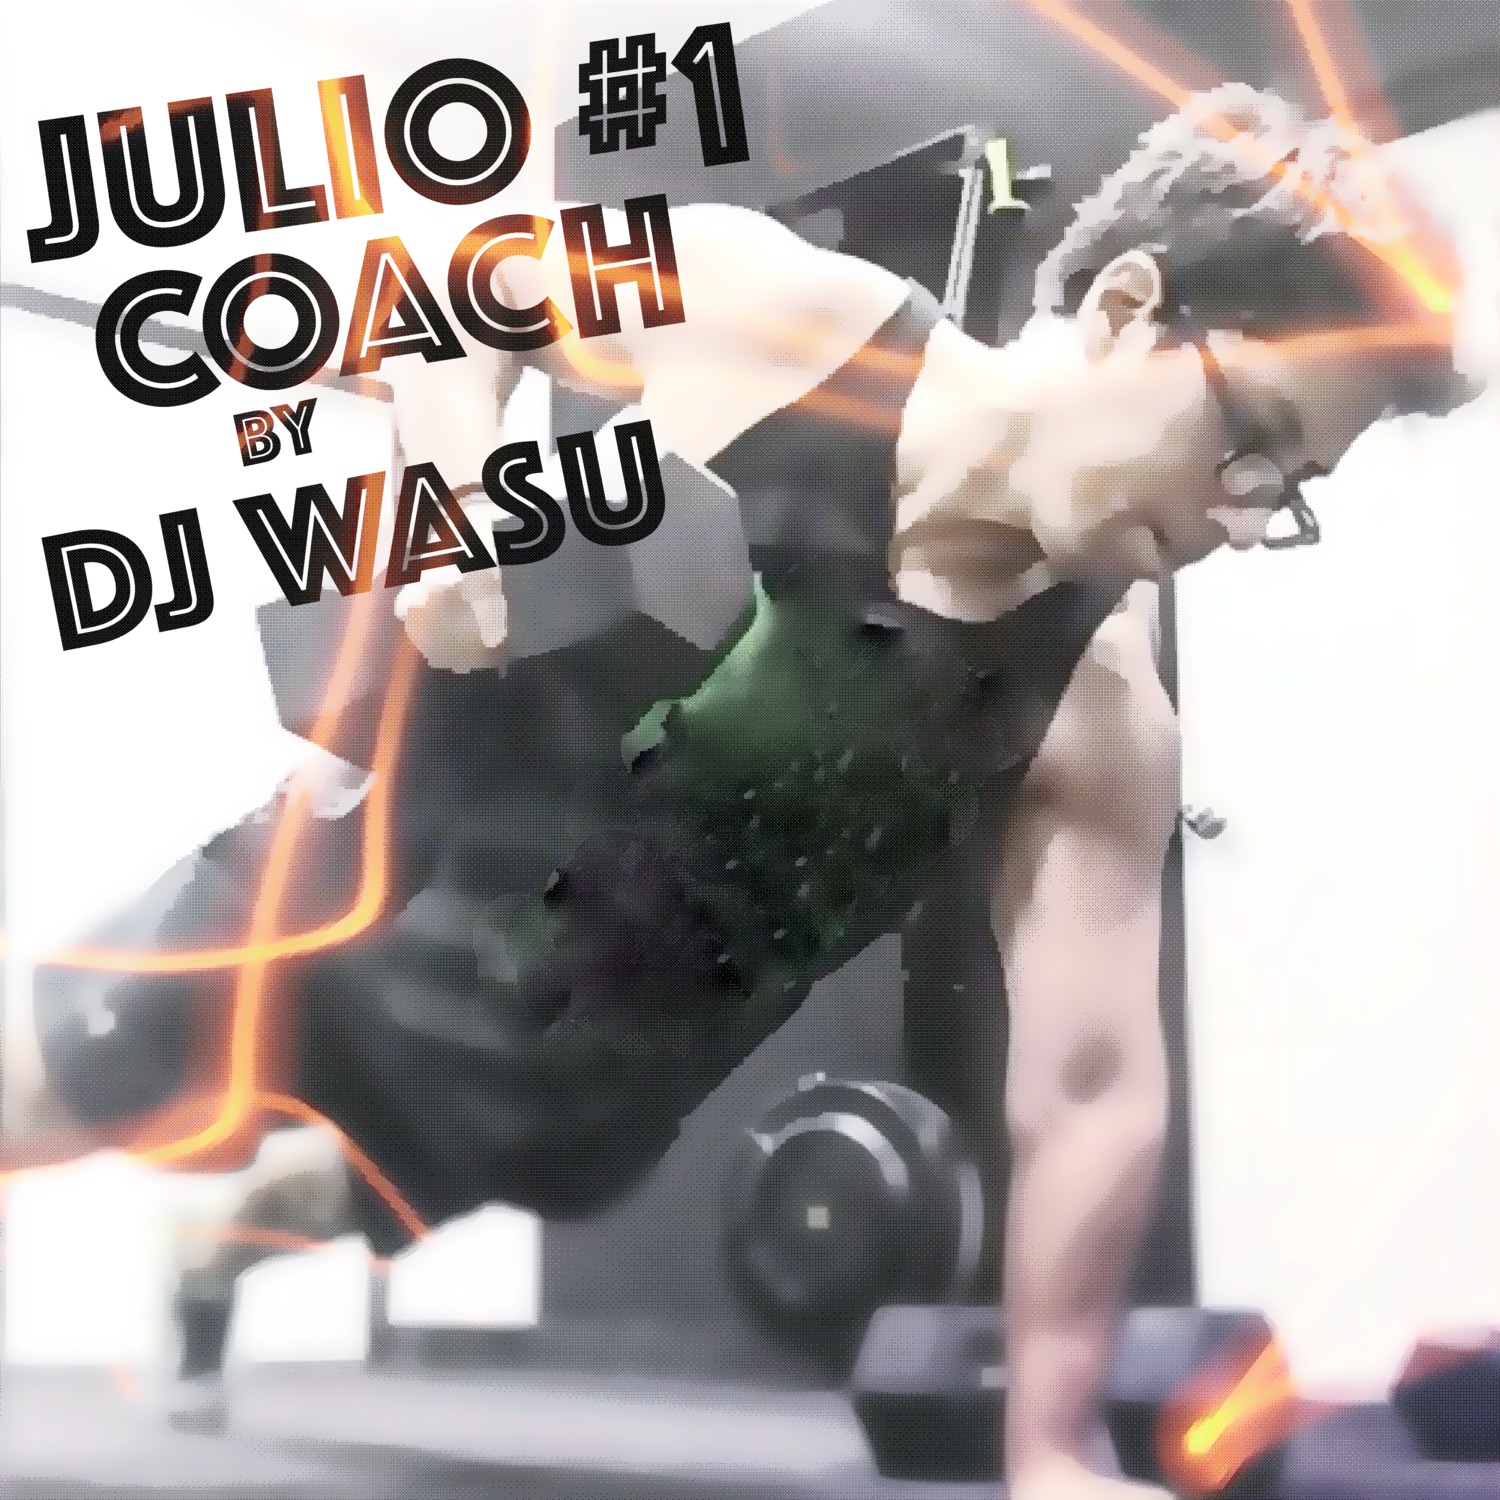 Julio Coach #1